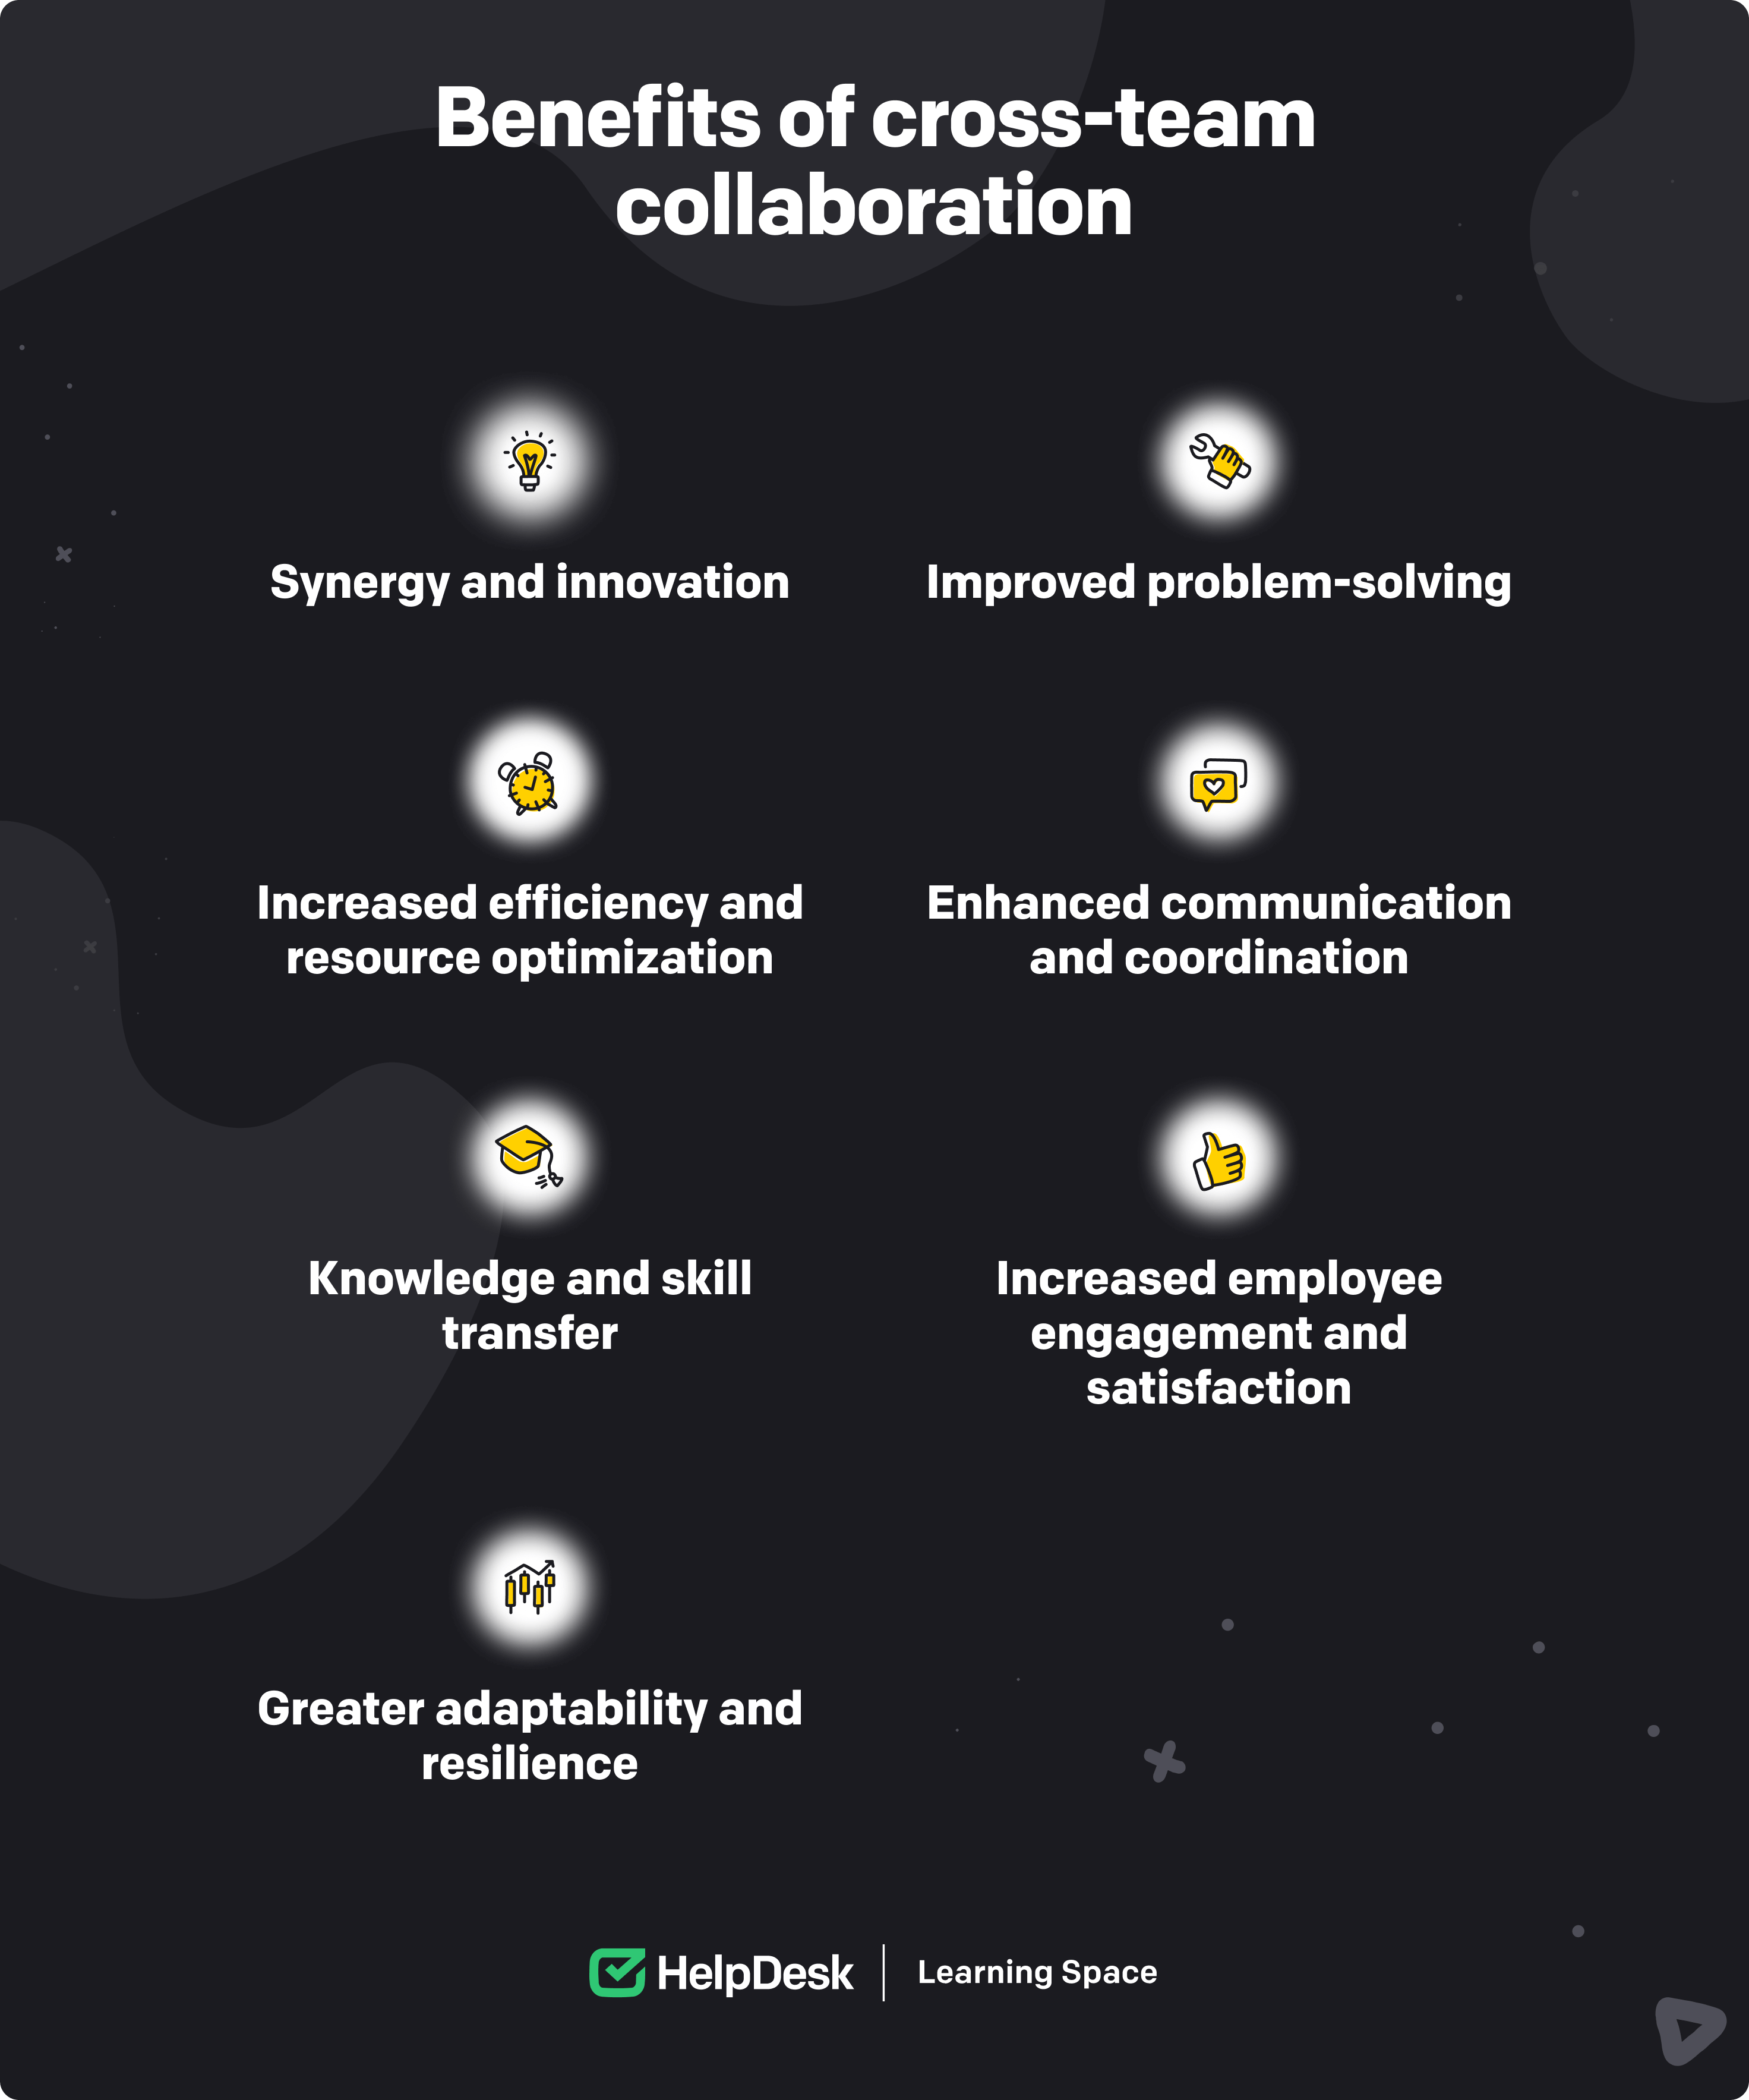 Benefits of cross-team collaboration